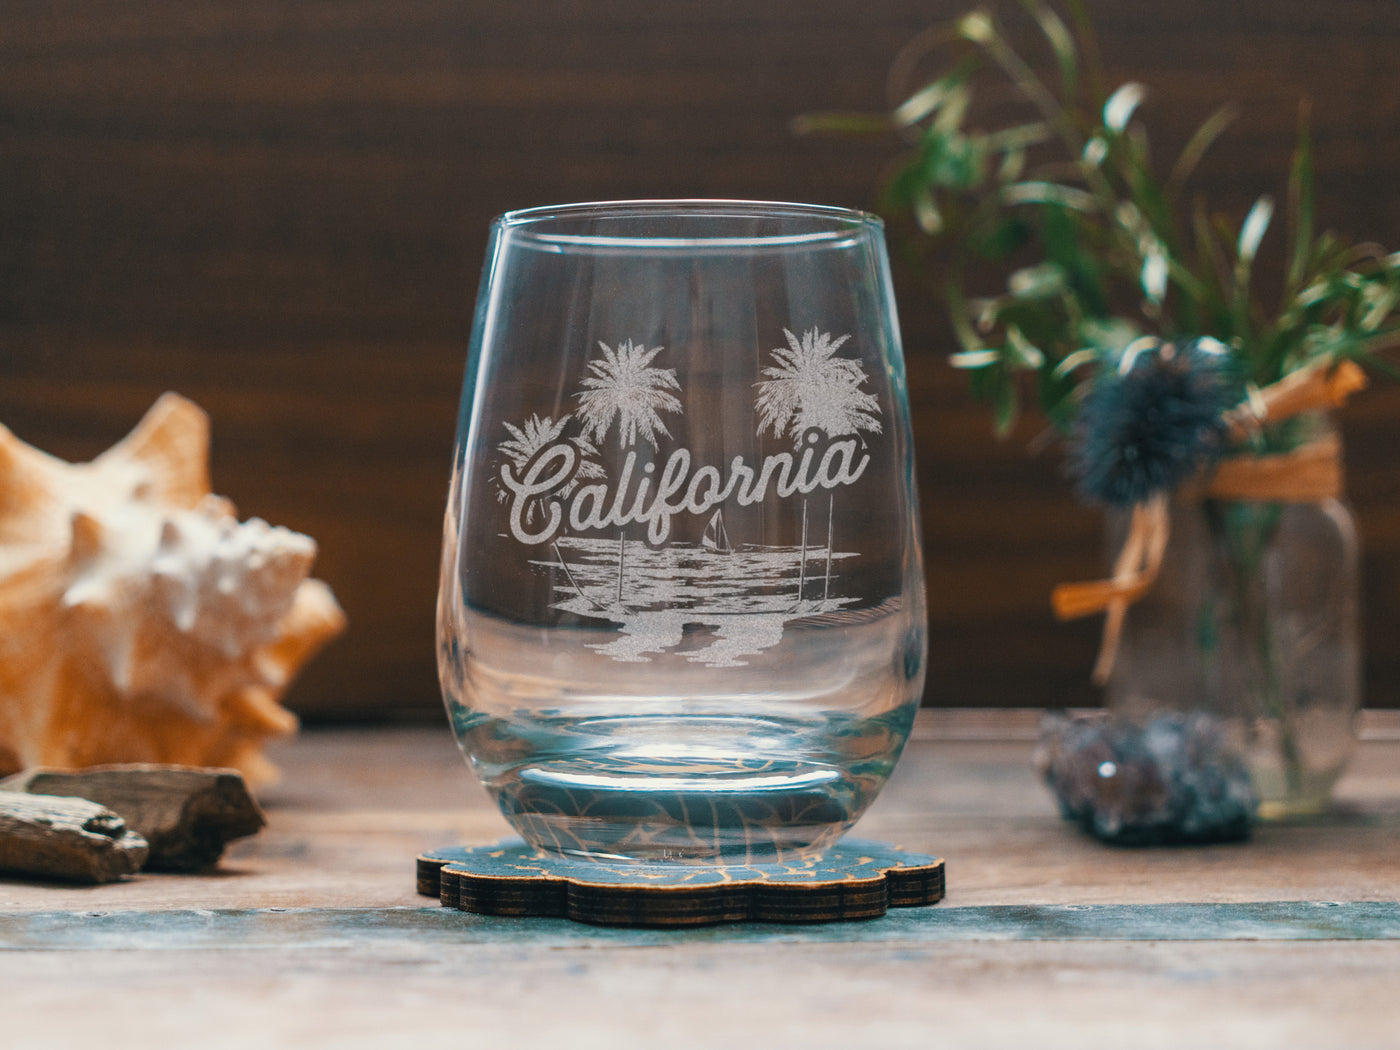 California Beach State Glassware